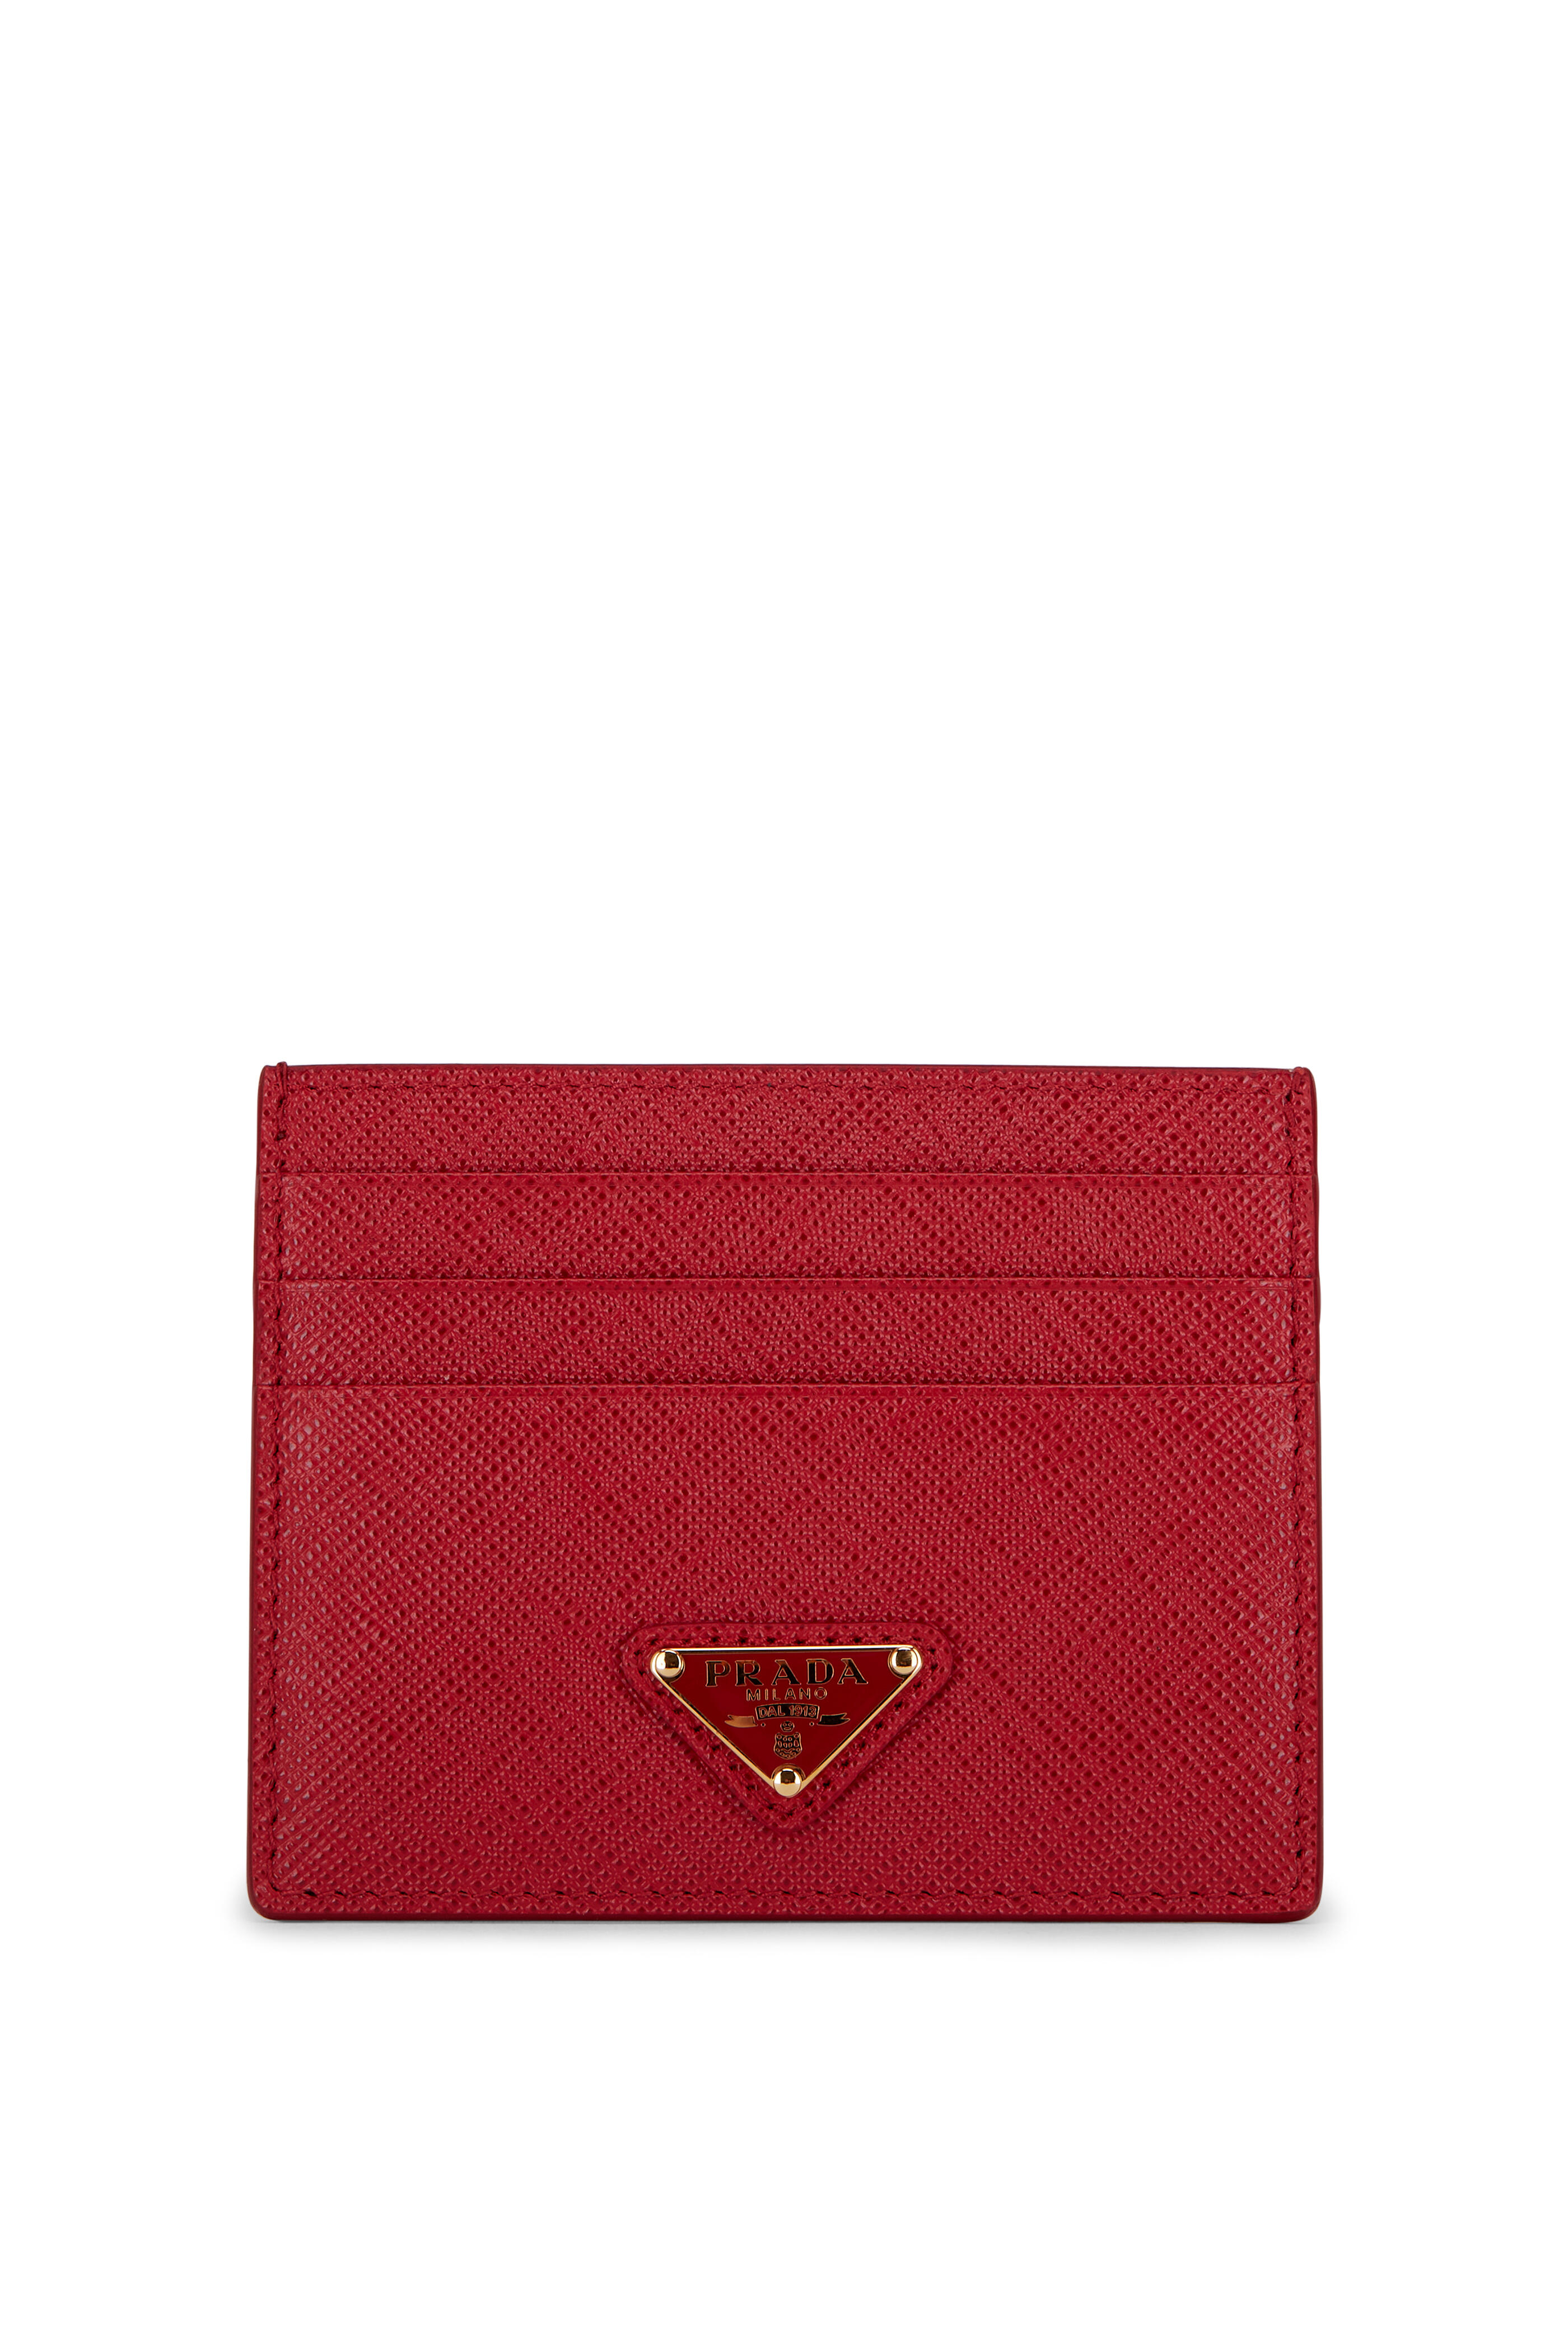 Prada Logo-Plaque Wallet - Red for Women